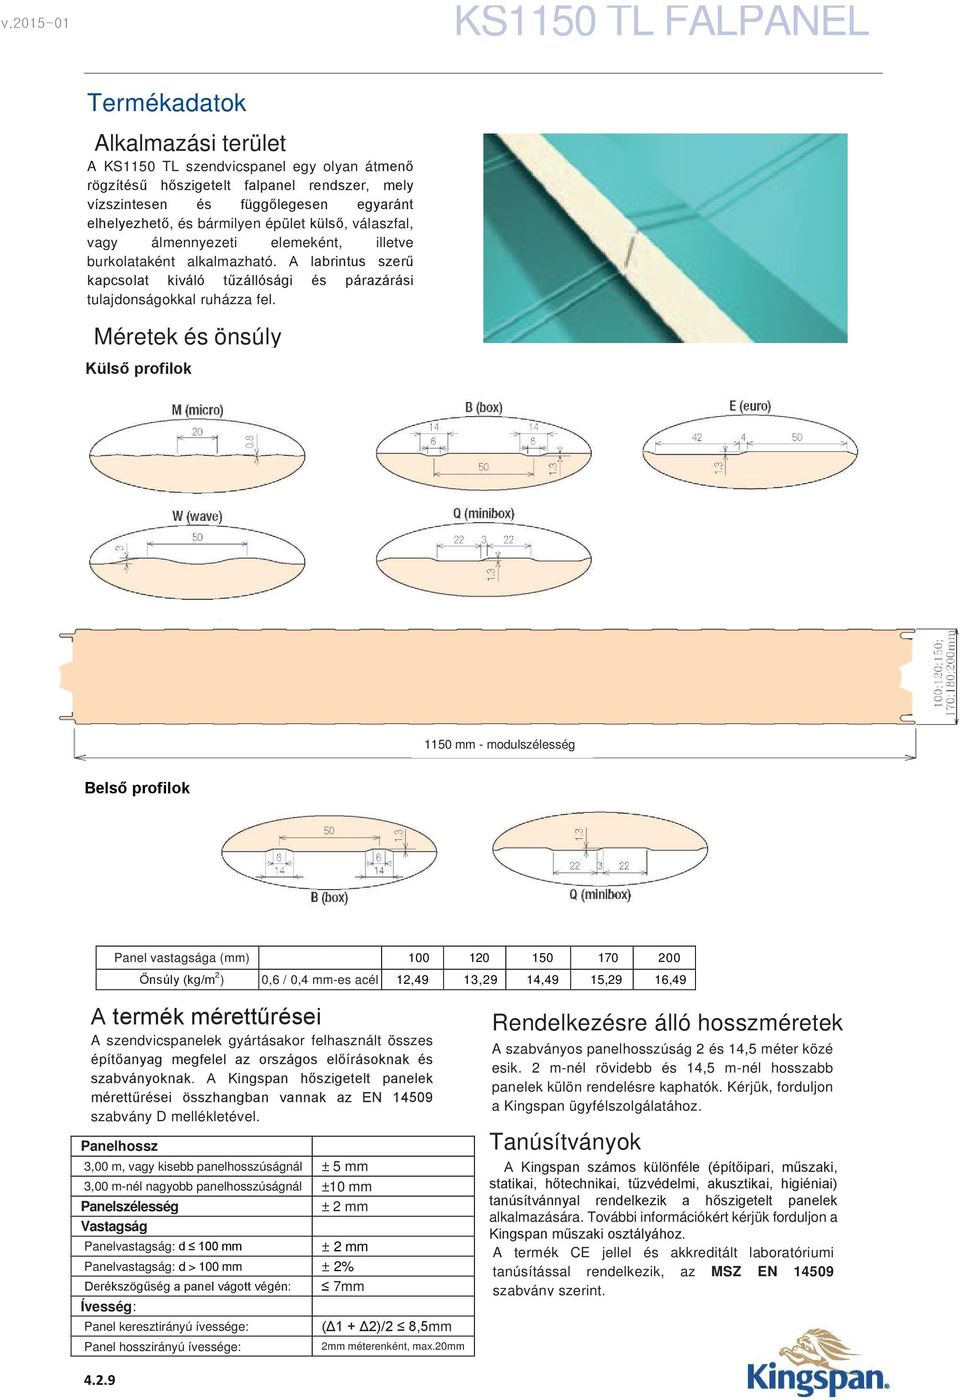 KS1150 TL FALPANEL. Termékadatok - PDF Free Download